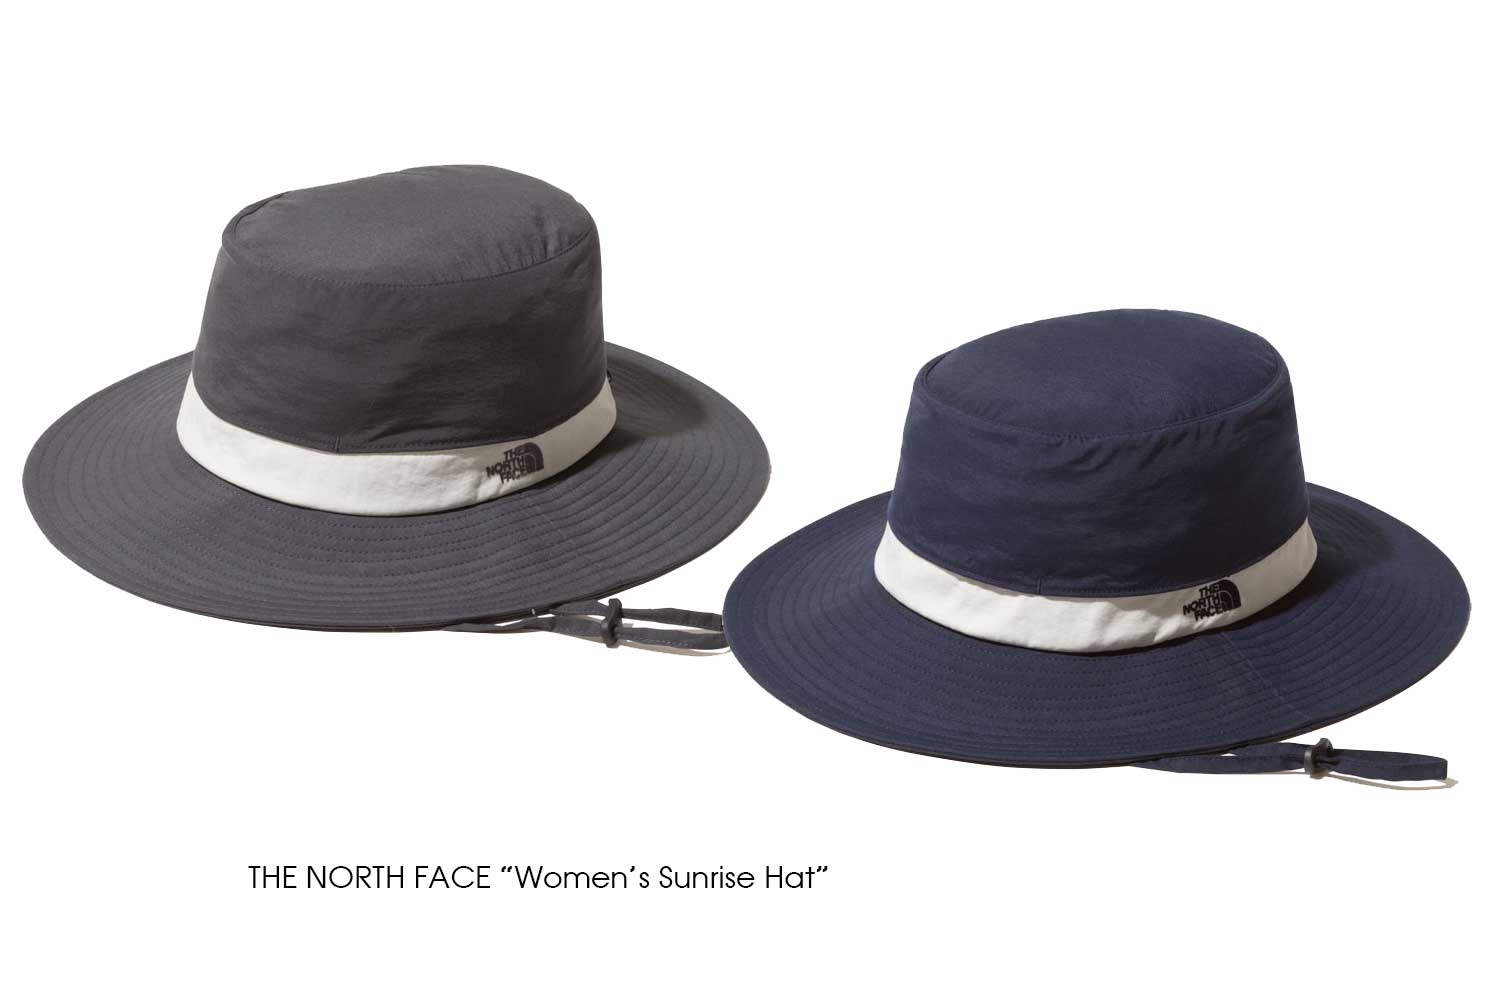 THE NORTH FACE "Women's Sunrise Hat"